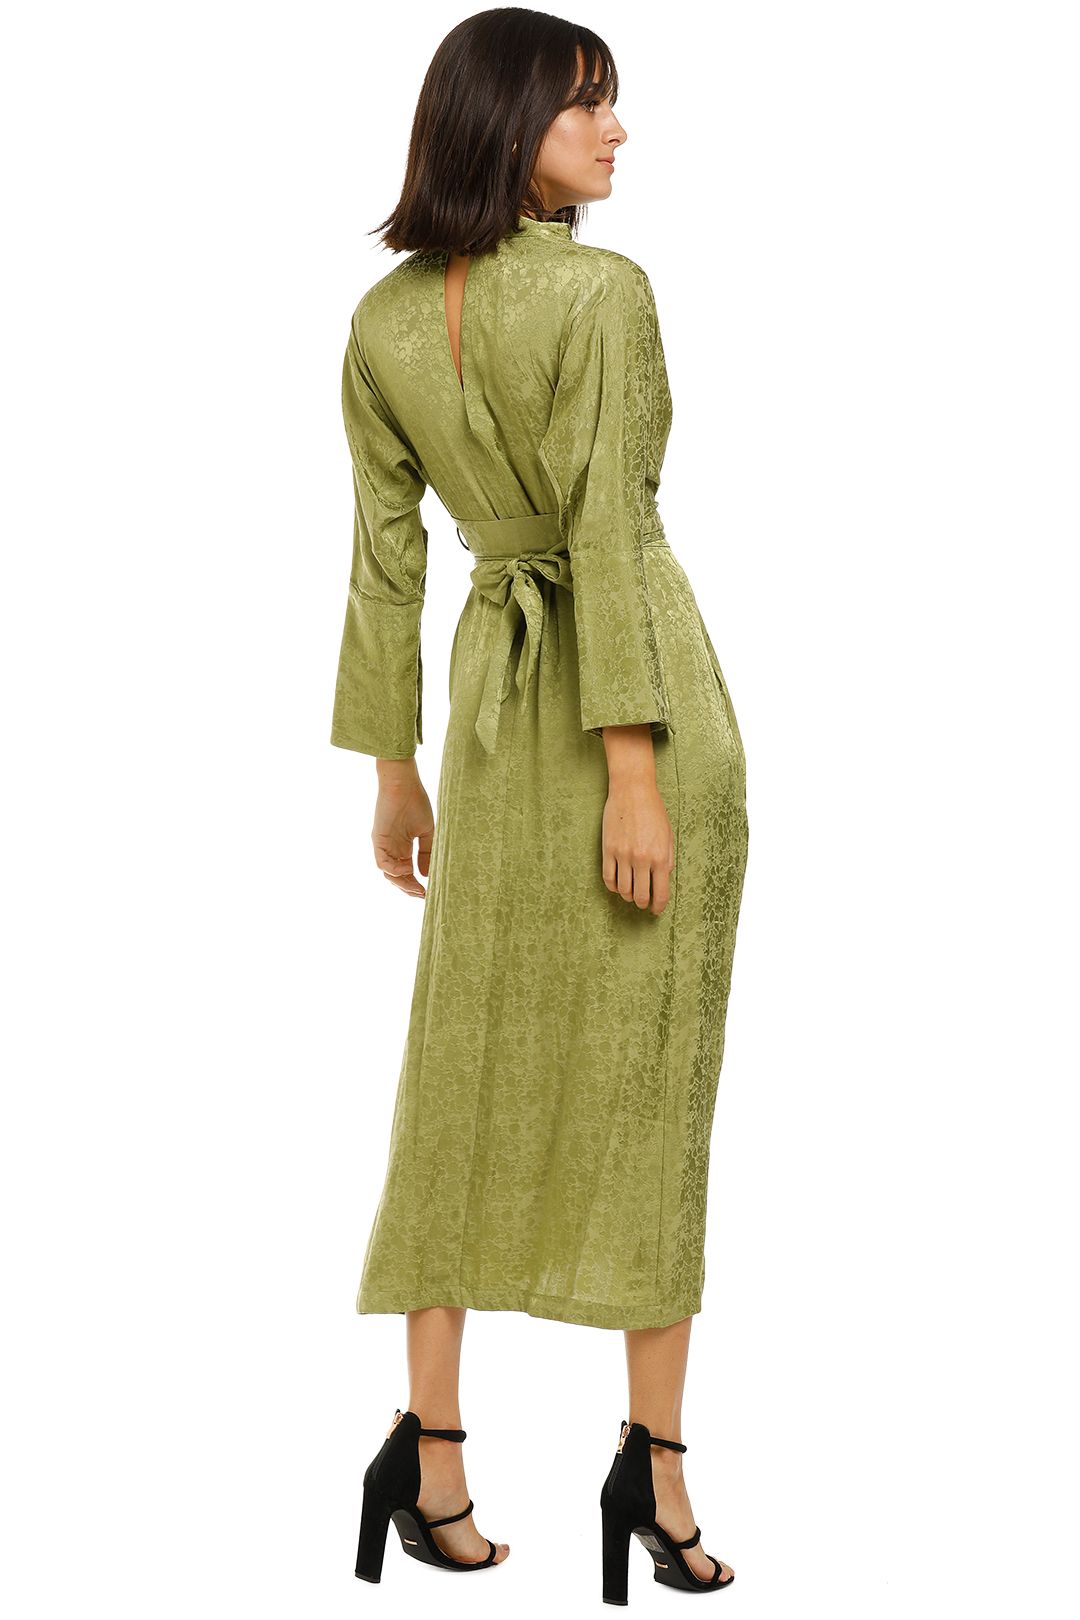 Slink Shirt Dress in Olive by KITX for Hire | GlamCorner